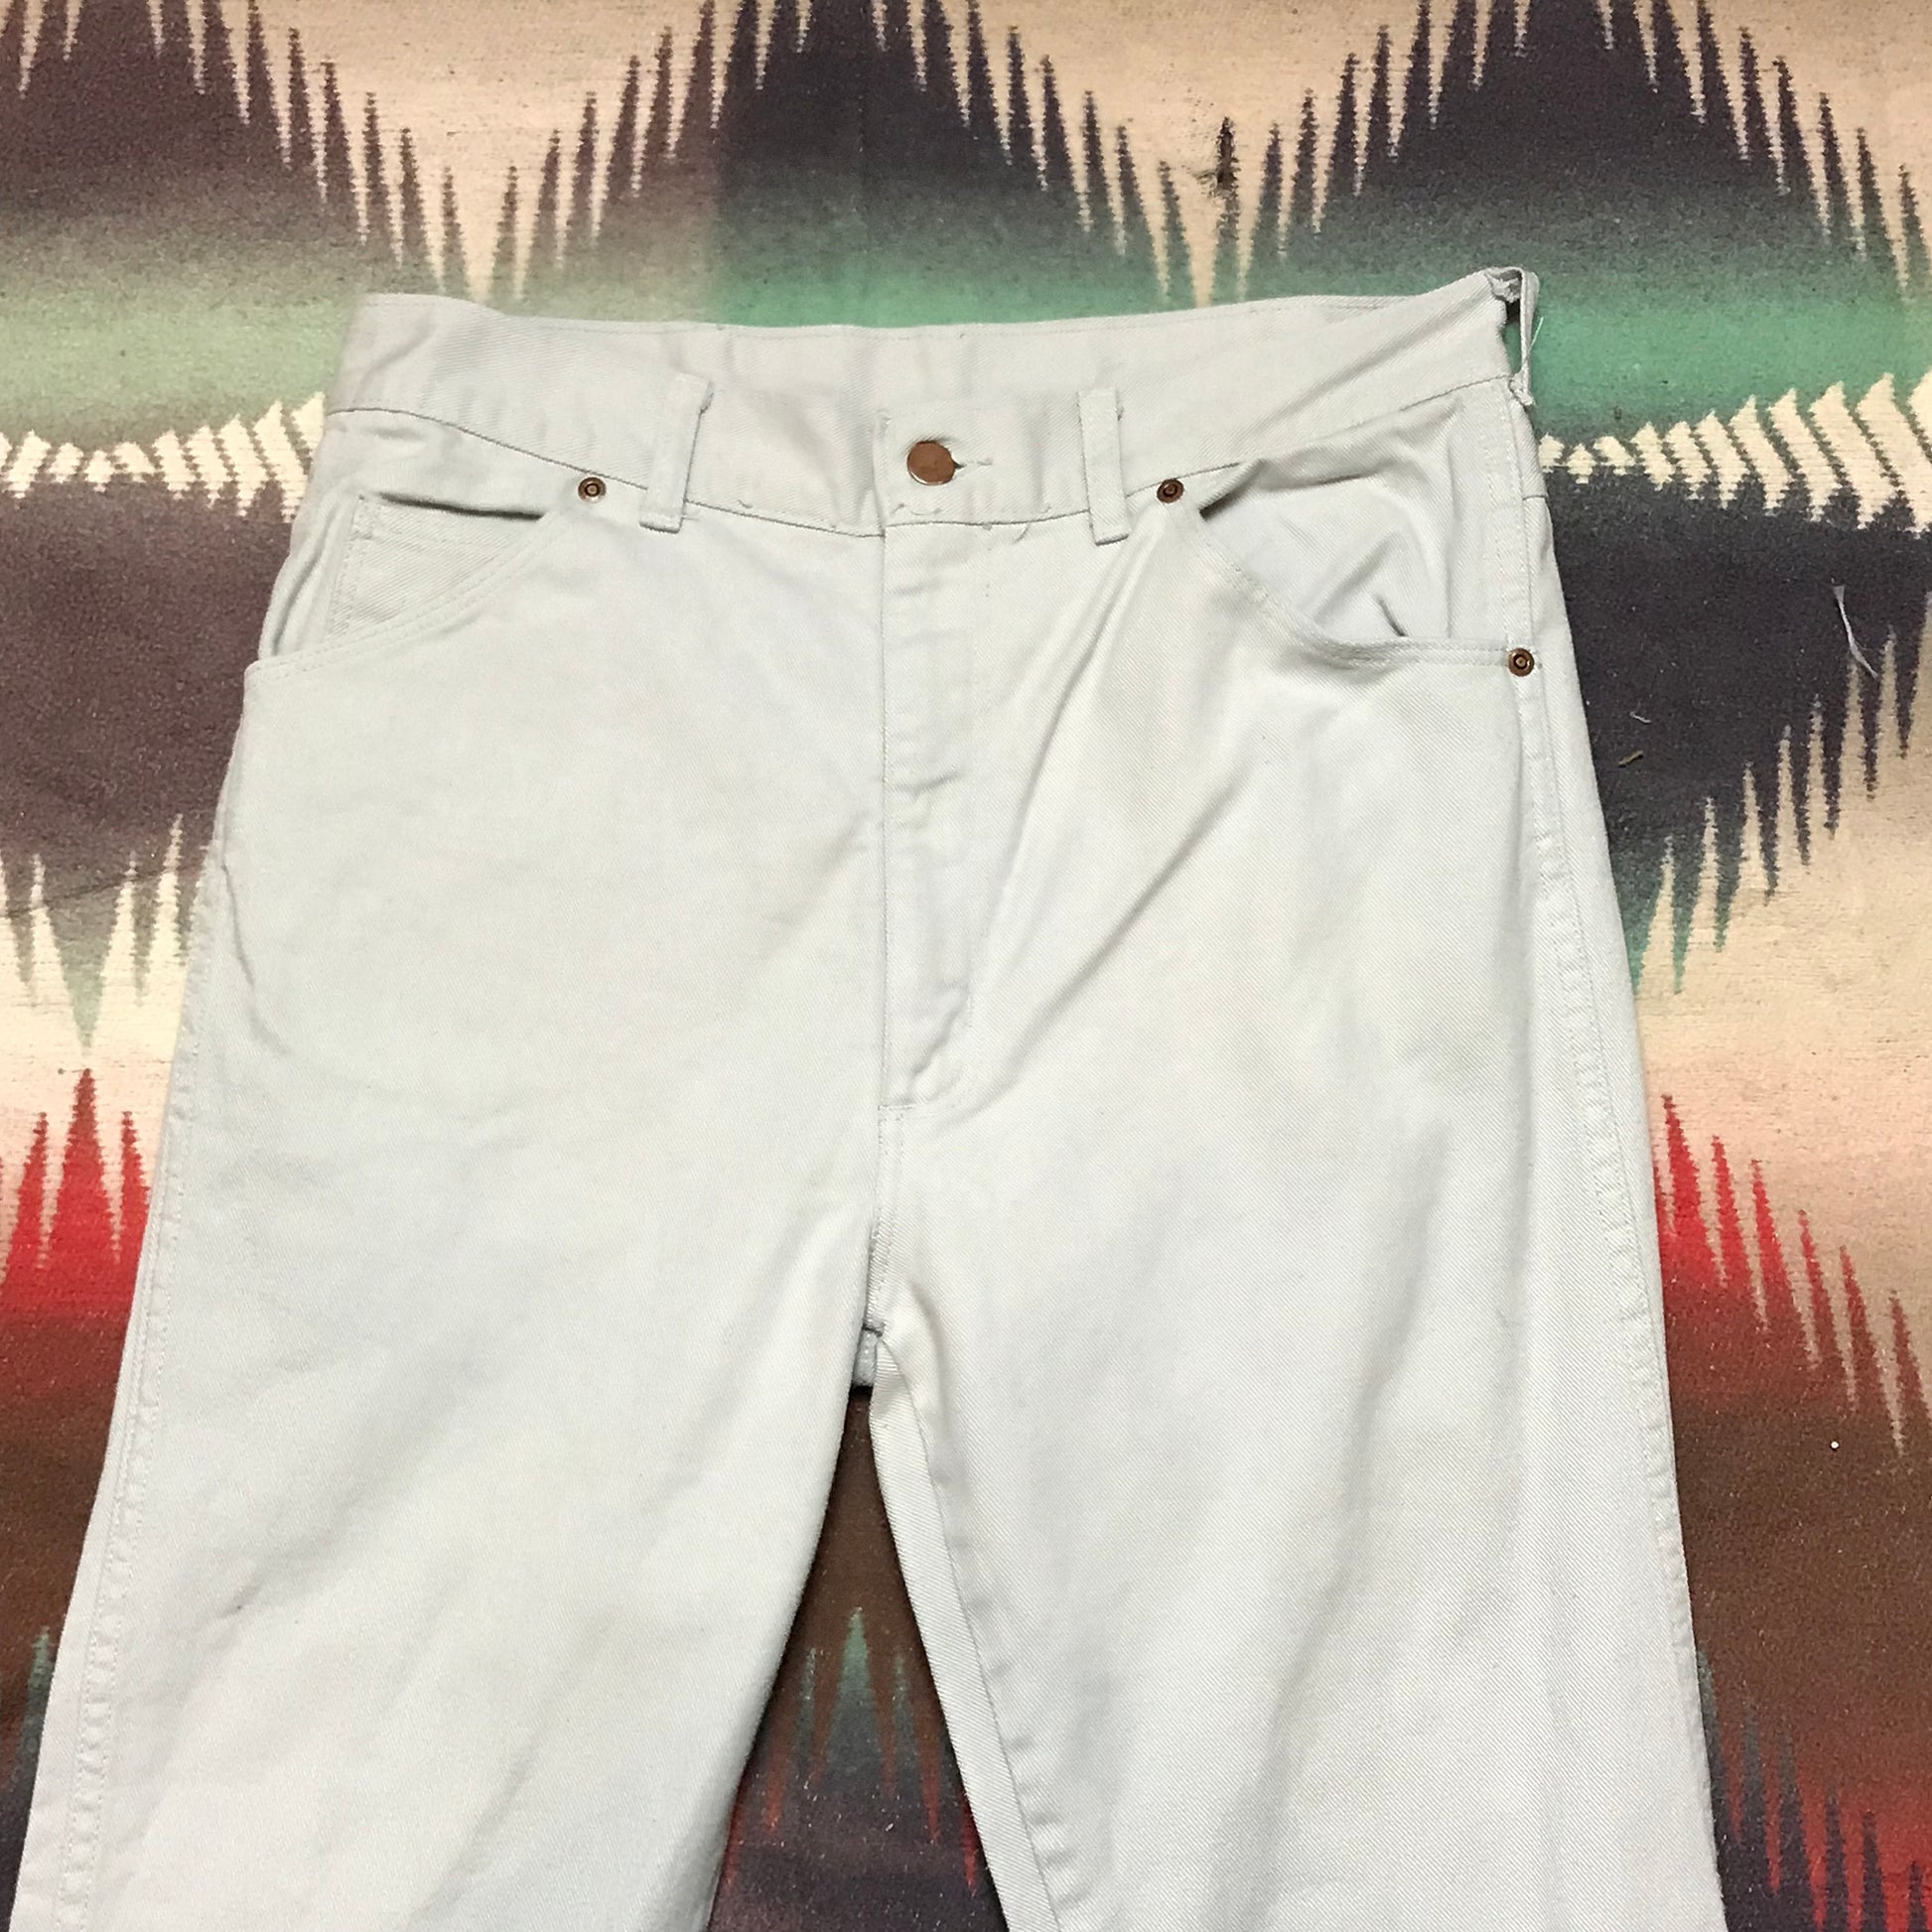 1970s/1980s Light Grey Denim Pants Size 32x32.5